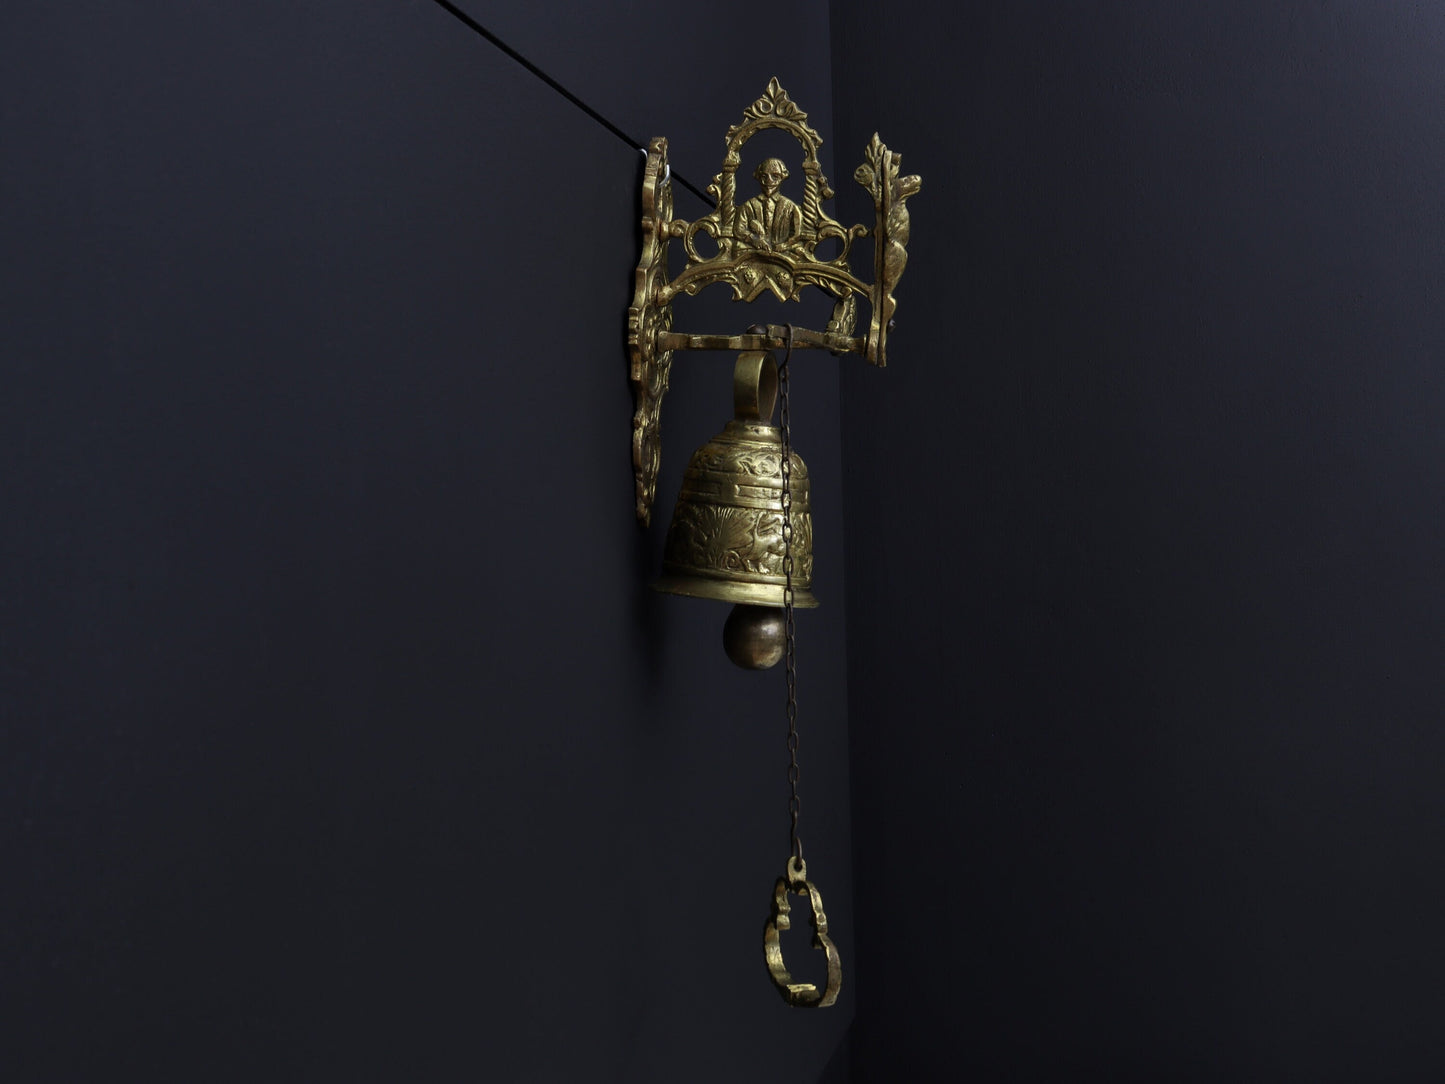 Wall Mounted Bell | Modern Farmhouse Decor, Dinner Bell | Brass Bell , Country Home Decor